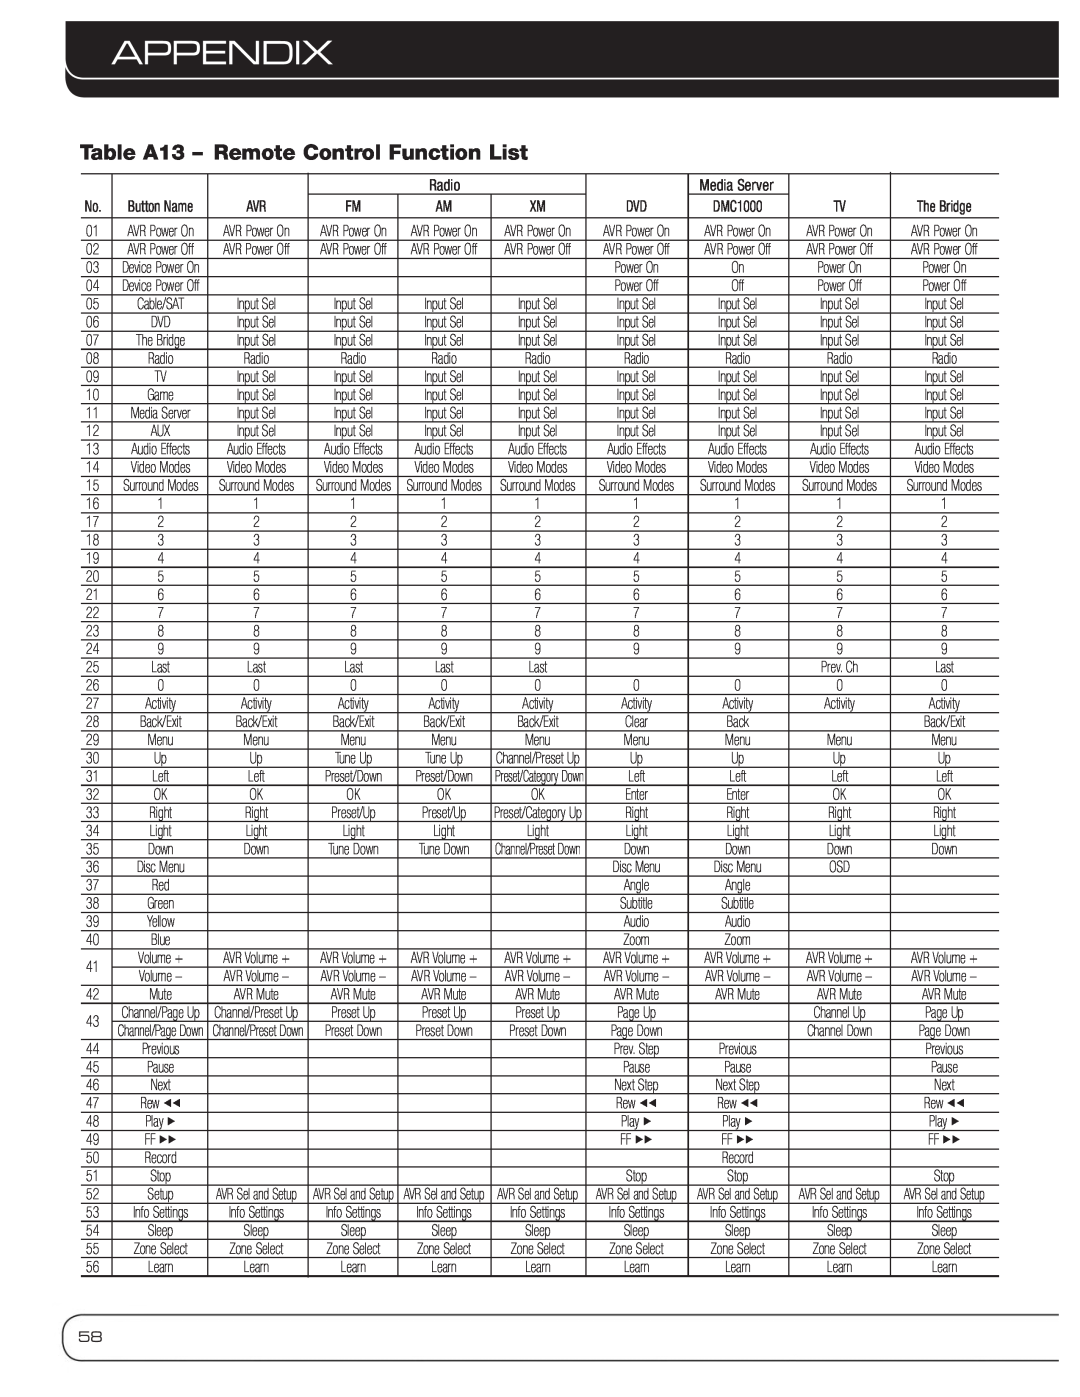 Harman-Kardon AVR 3600 owner manual Table A13 – Remote Control Function List, Appendix 